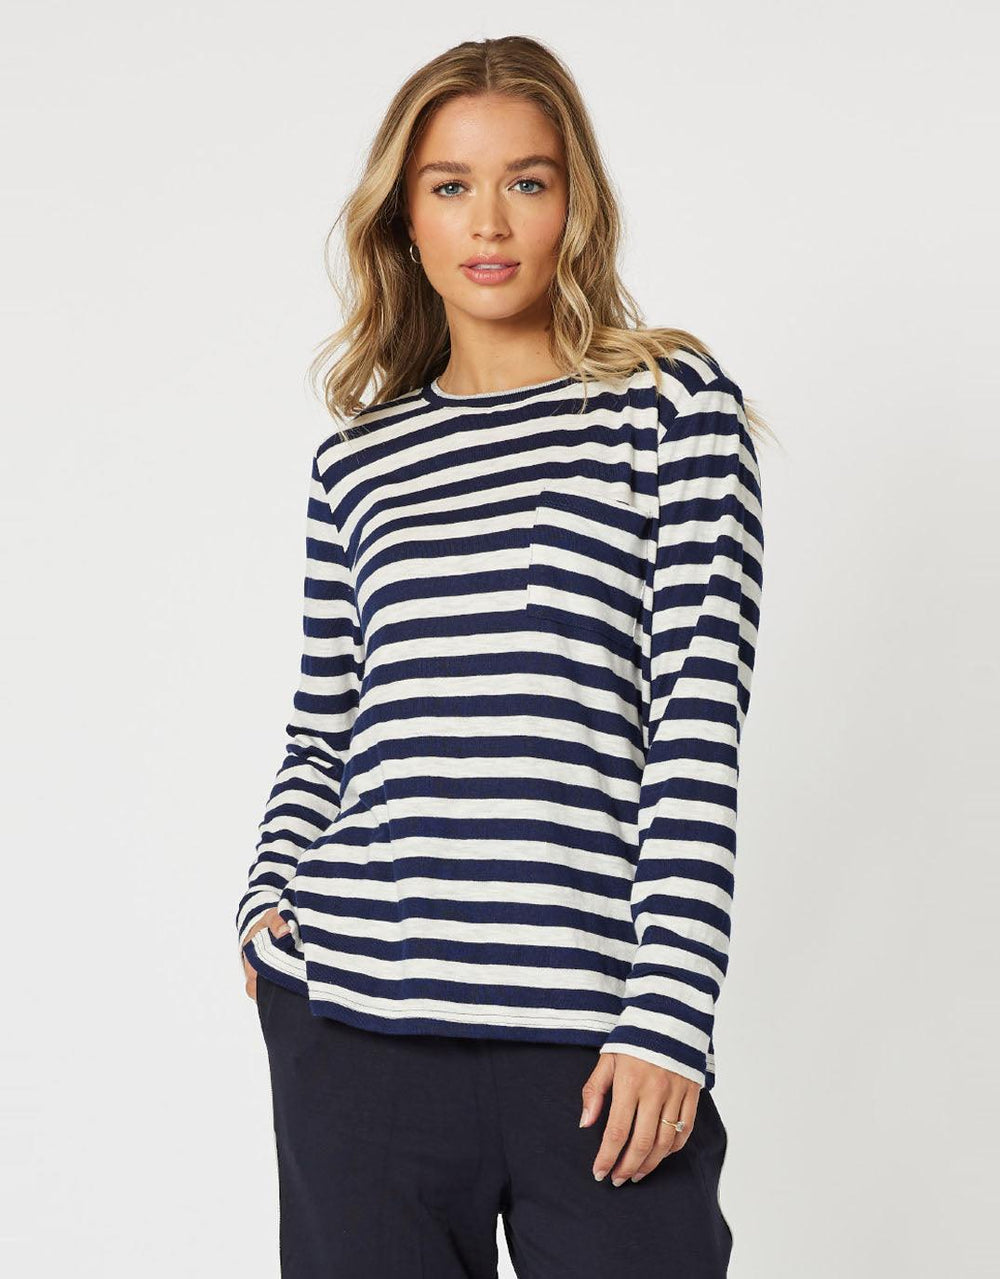 Threadz - Stripe Long Sleeve T-Shirt - Navy/White - paulaglazebrook Tees & Tanks